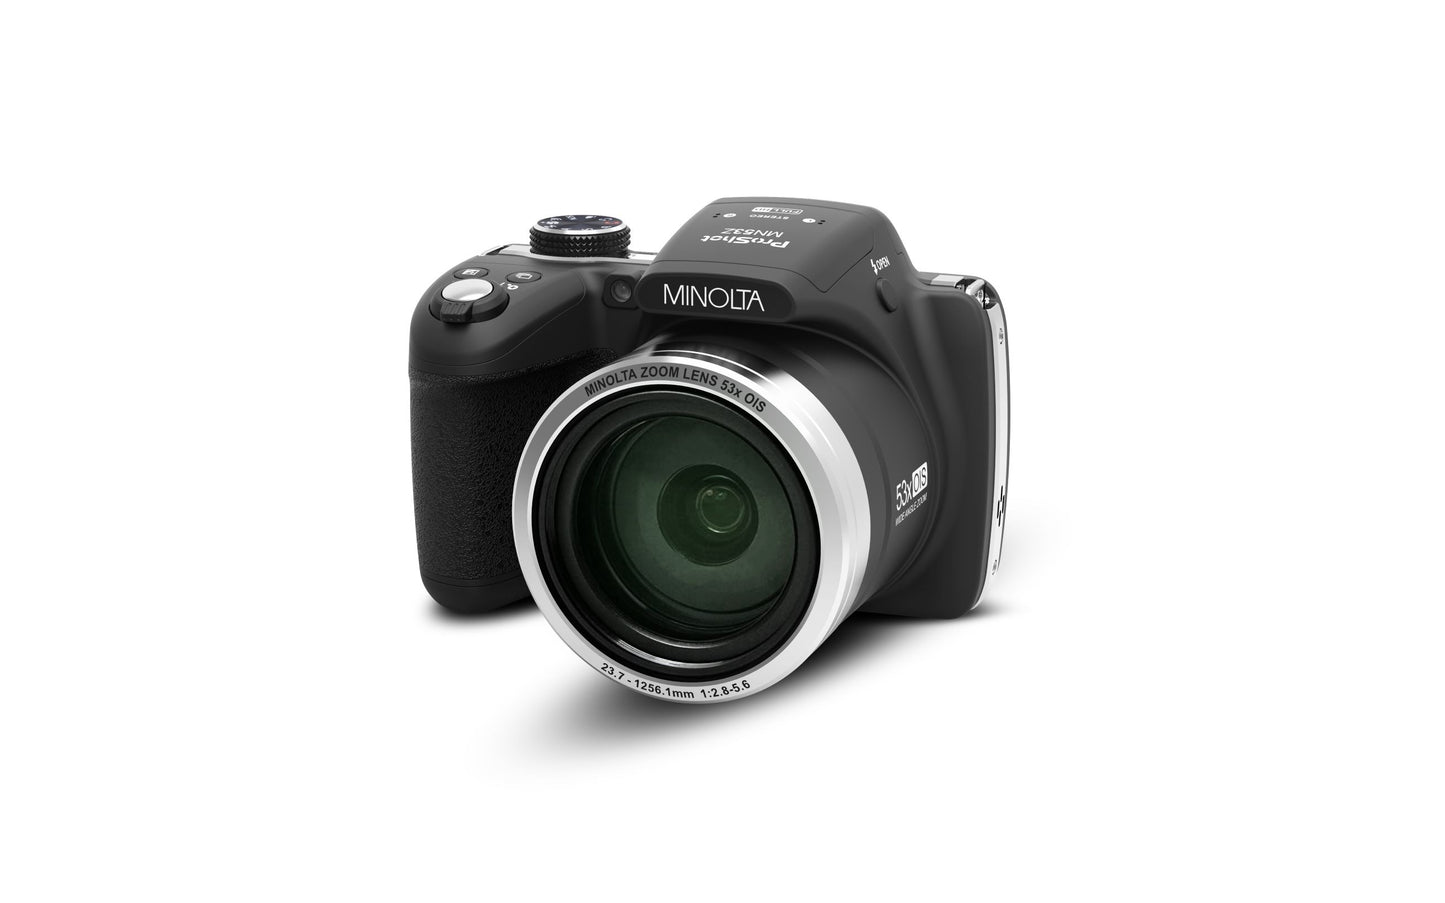 MN53Z 16MP / 1080p HD 53X Optical Zoom Wi-Fi Bridge Camera